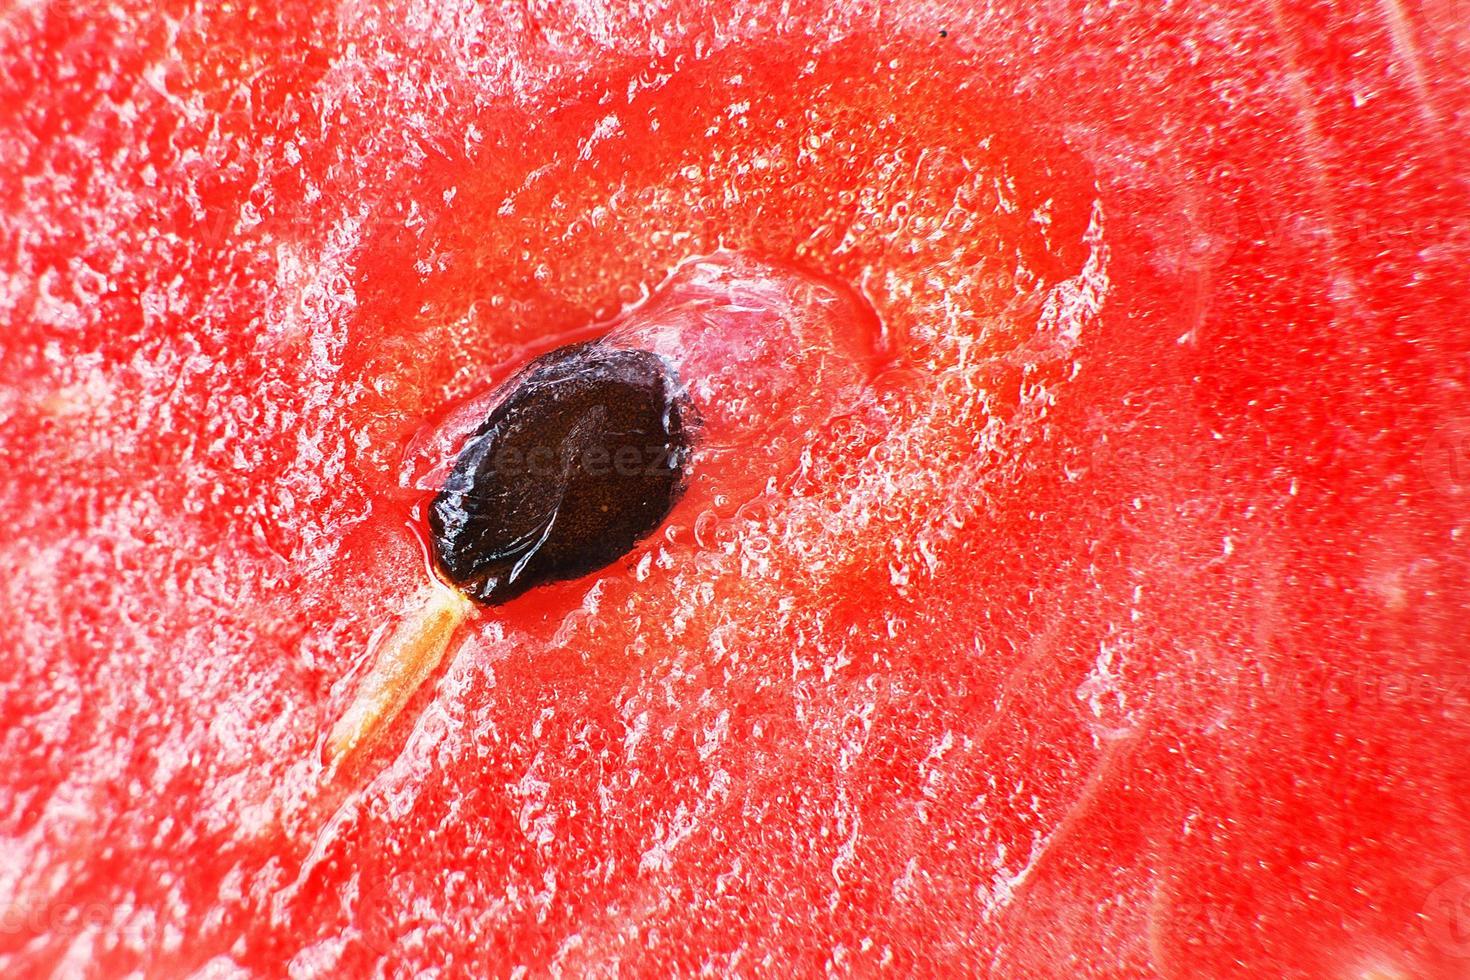 slice of watermelon close-up. watermelon seed macro. watermelon background photo